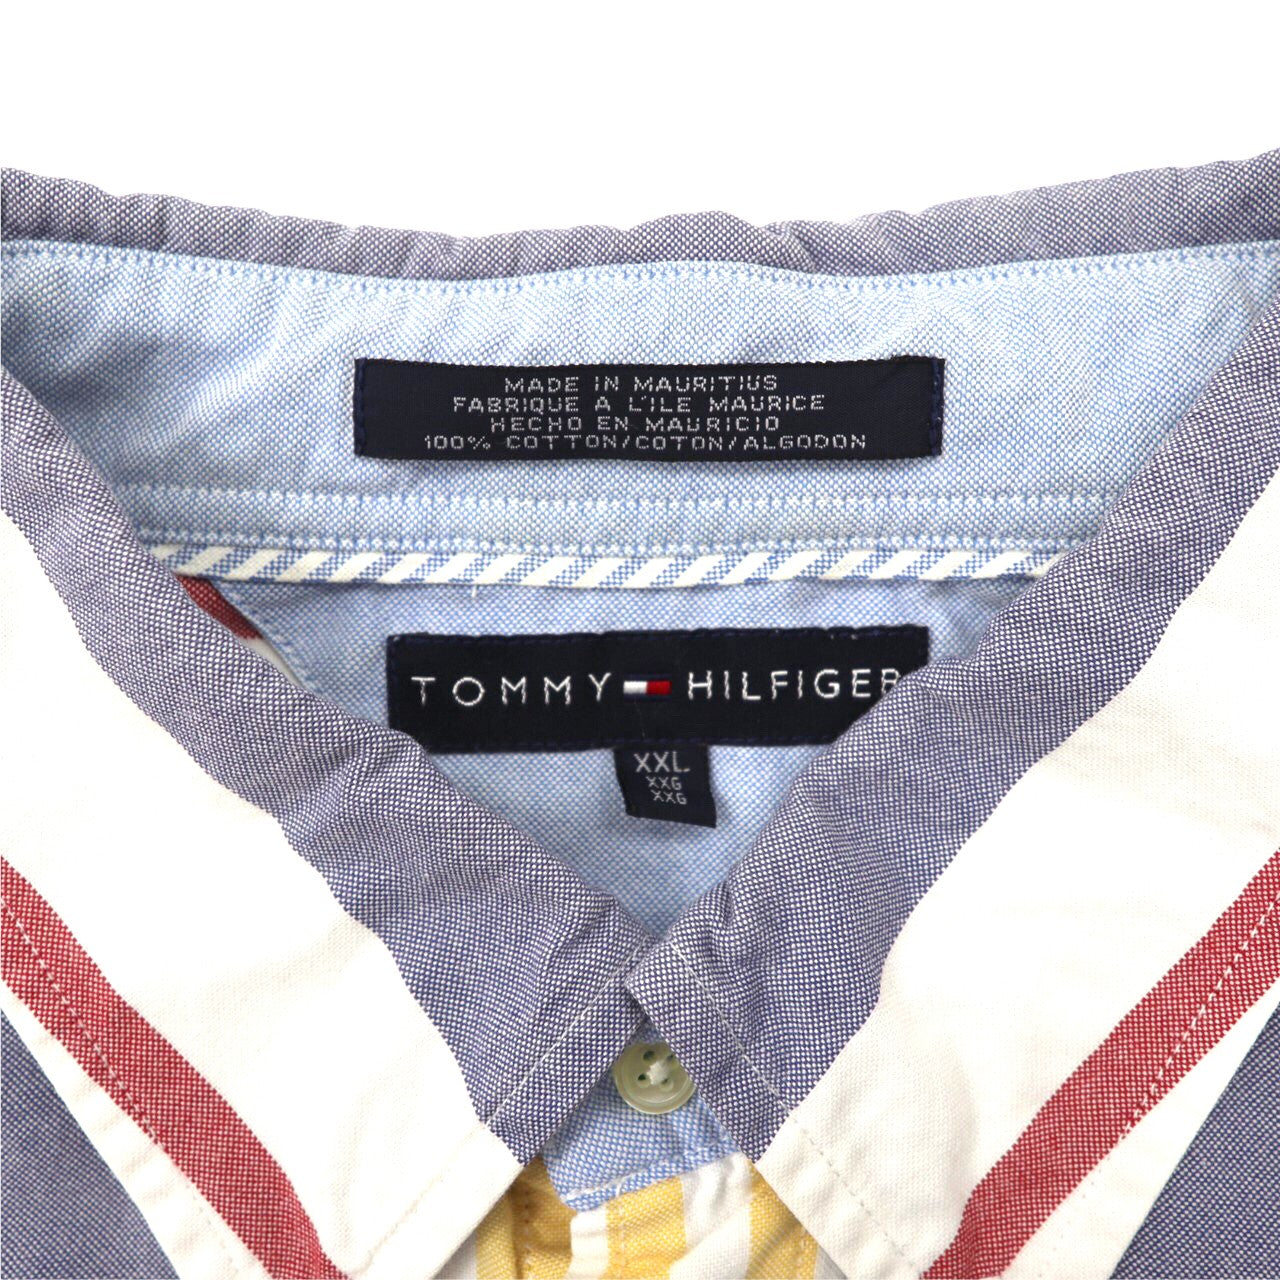 TOMMY HILFIGER ボタンダウンシャツ XXL ブルー ストライプ ビッグサイズ